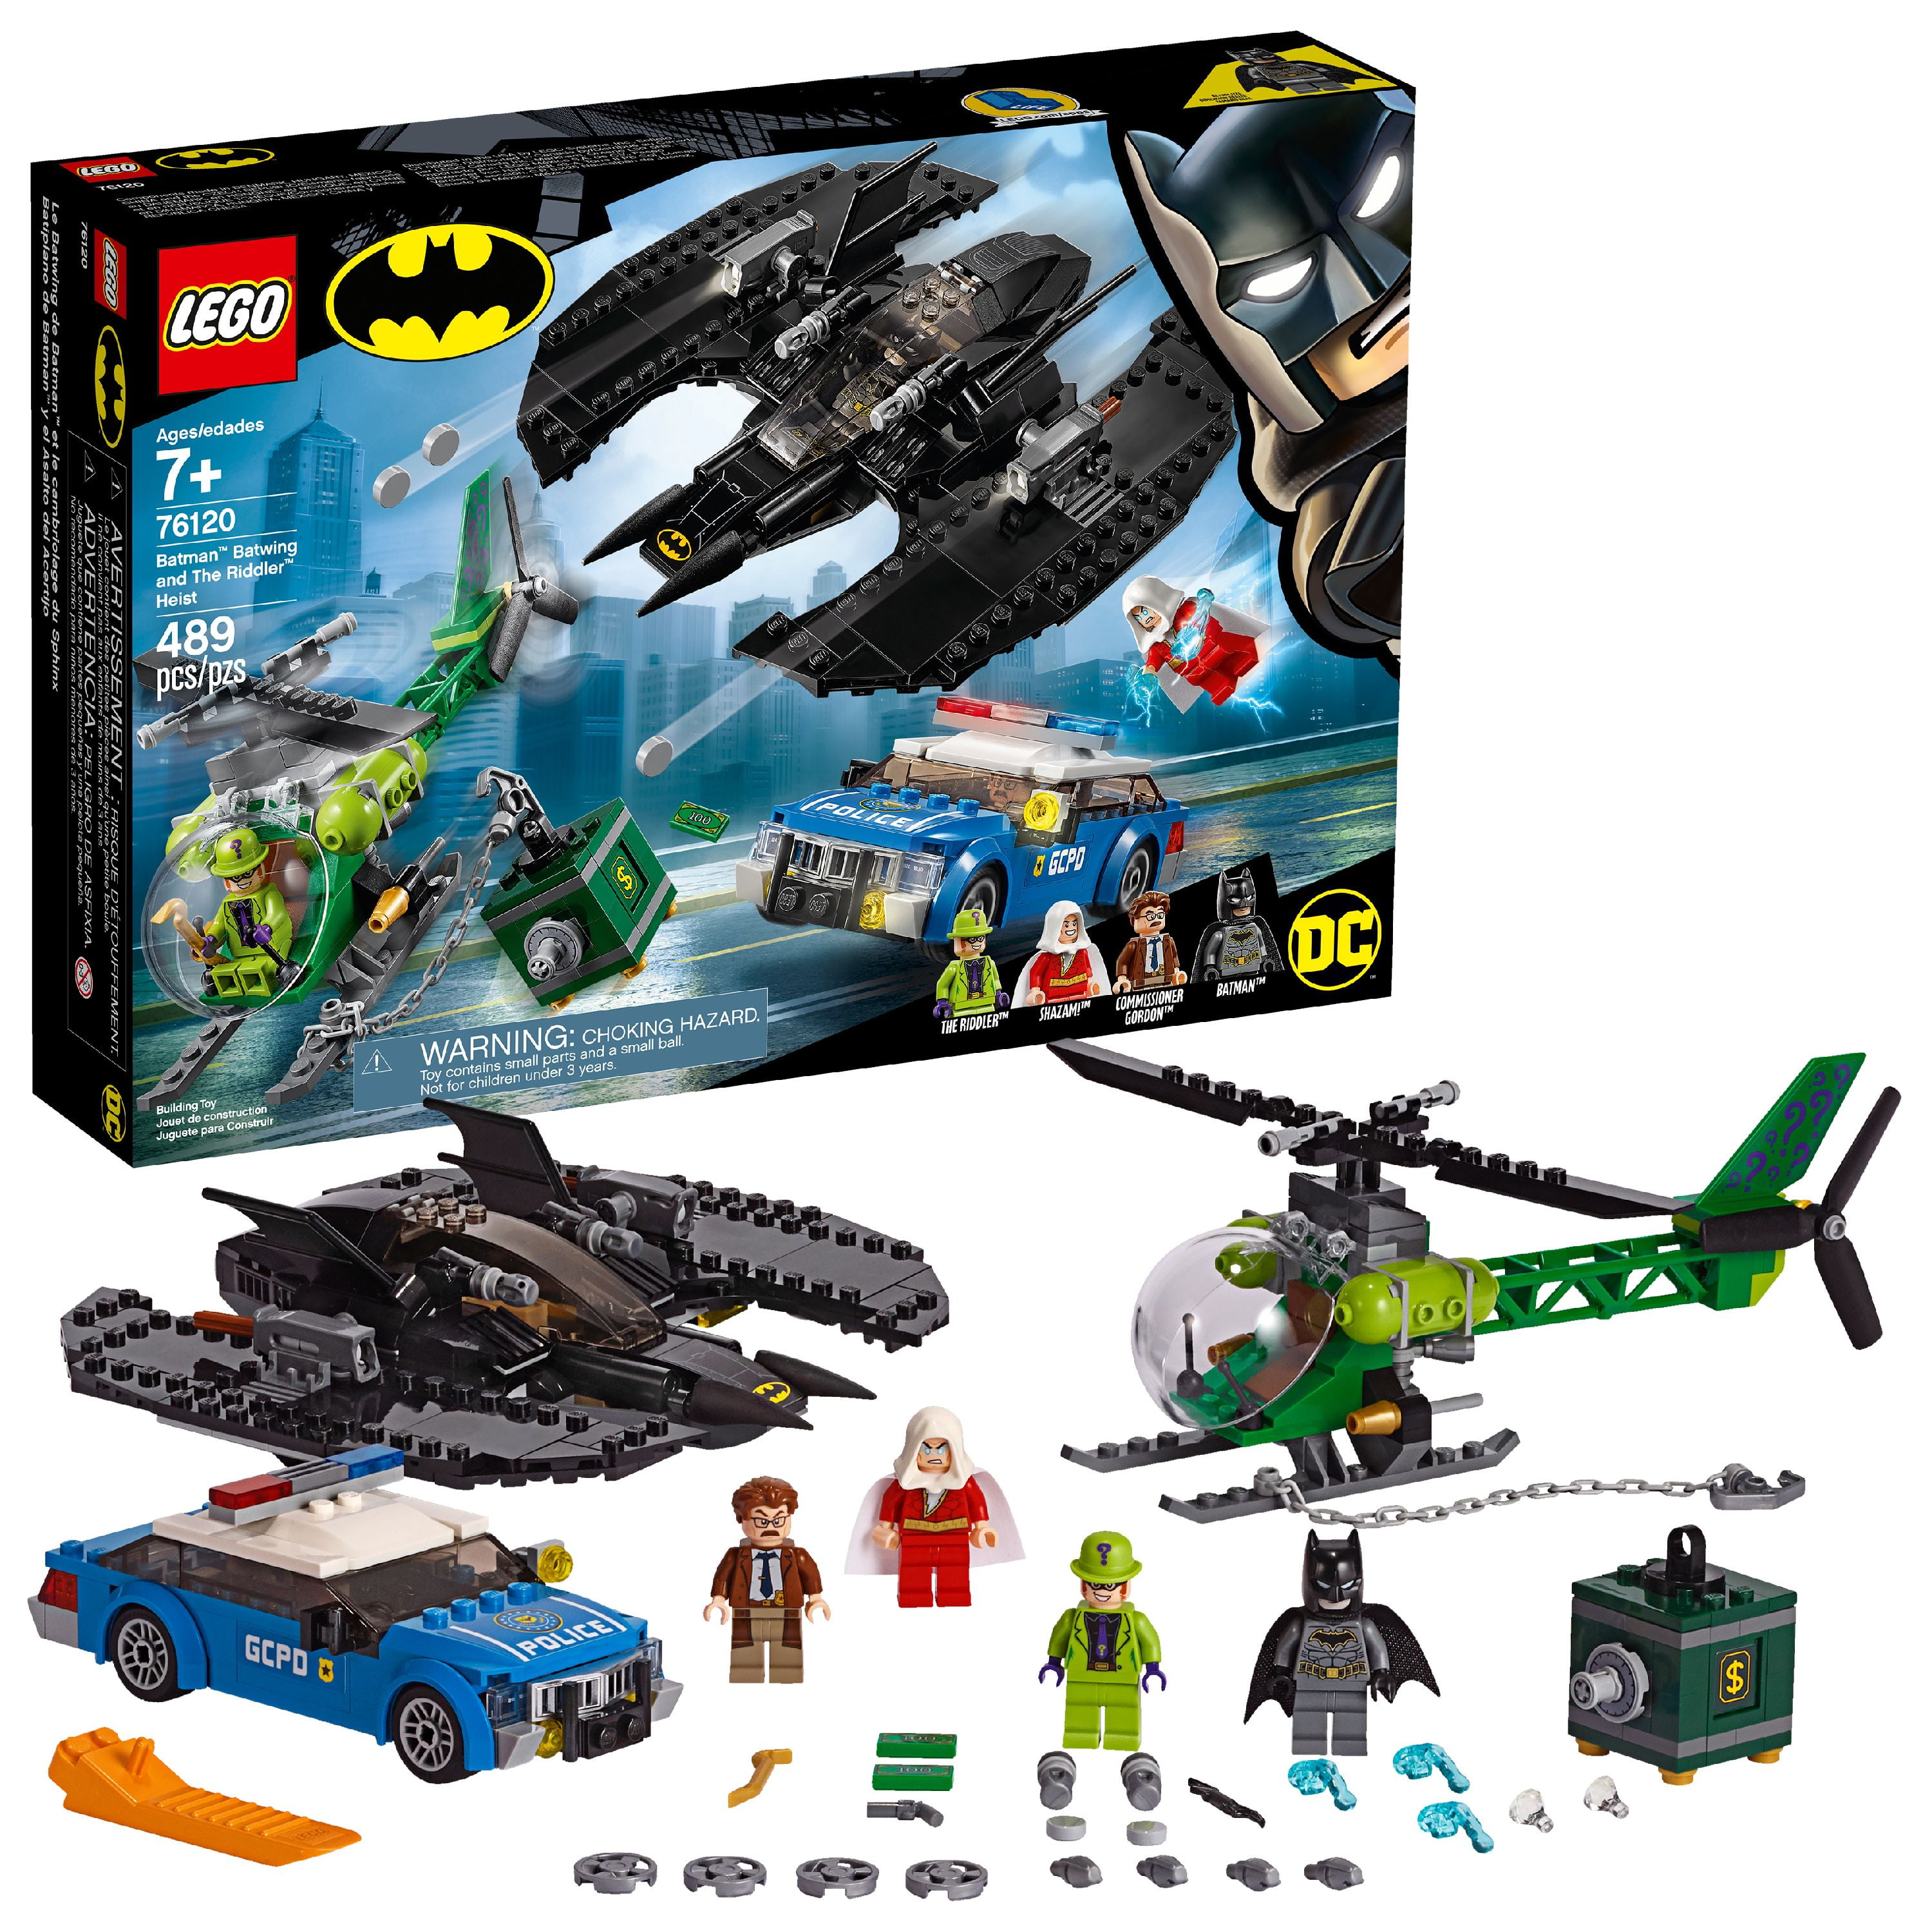 Bagged Set for sale online 30301 LEGO DC Comics Super Heroes Batwing 